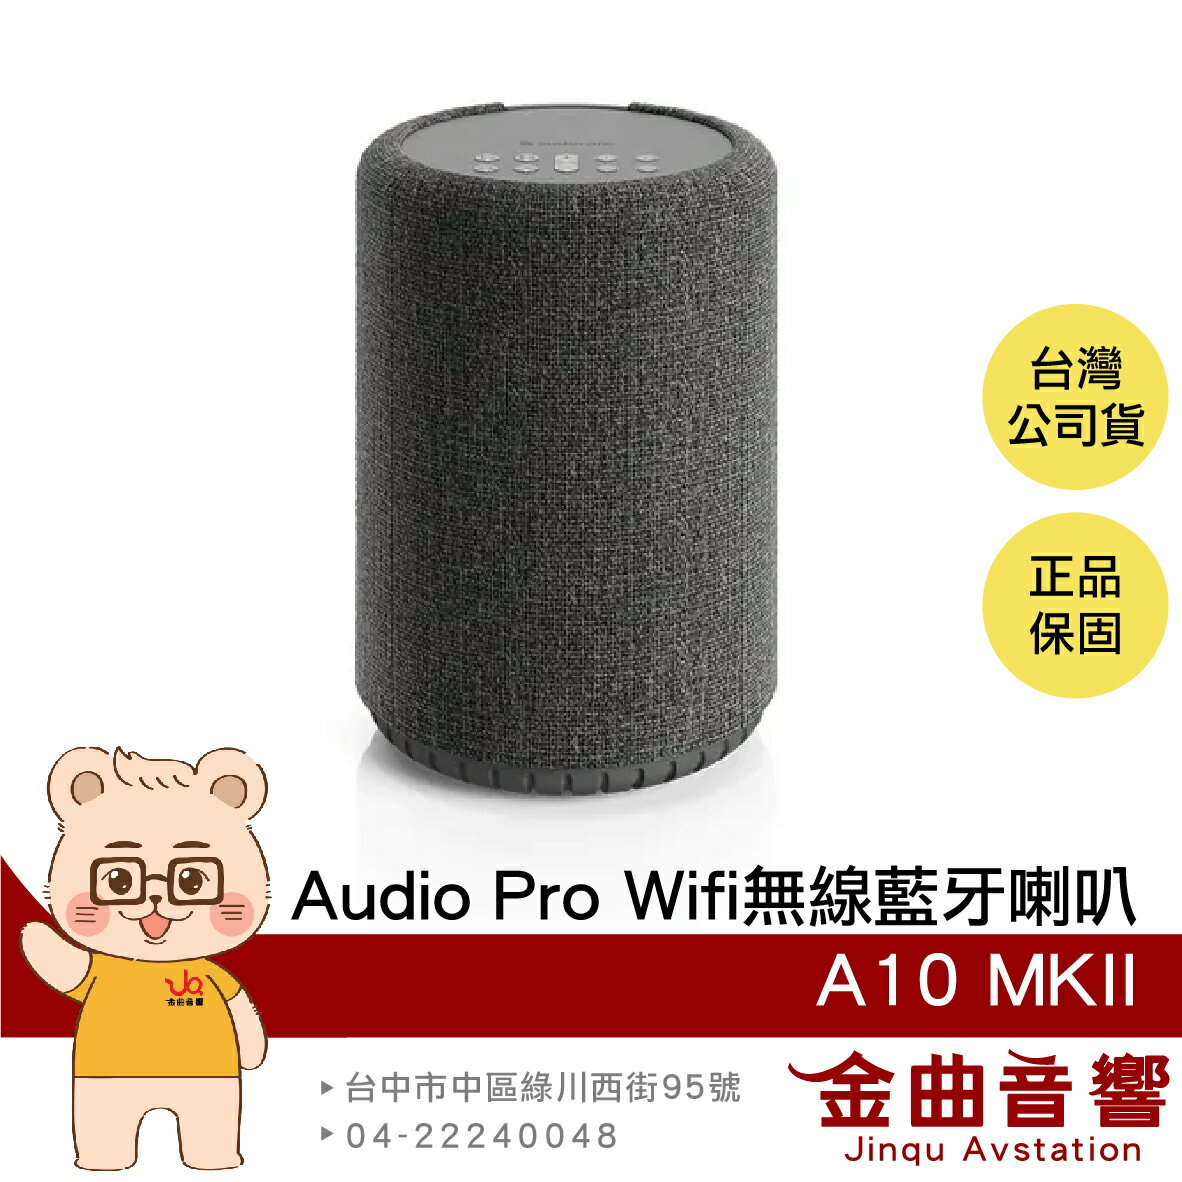 Audio Pro A10 MKII 深灰色 支援串流 多樣連接 商業適用 Wifi 無線 藍牙喇叭 | 金曲音響